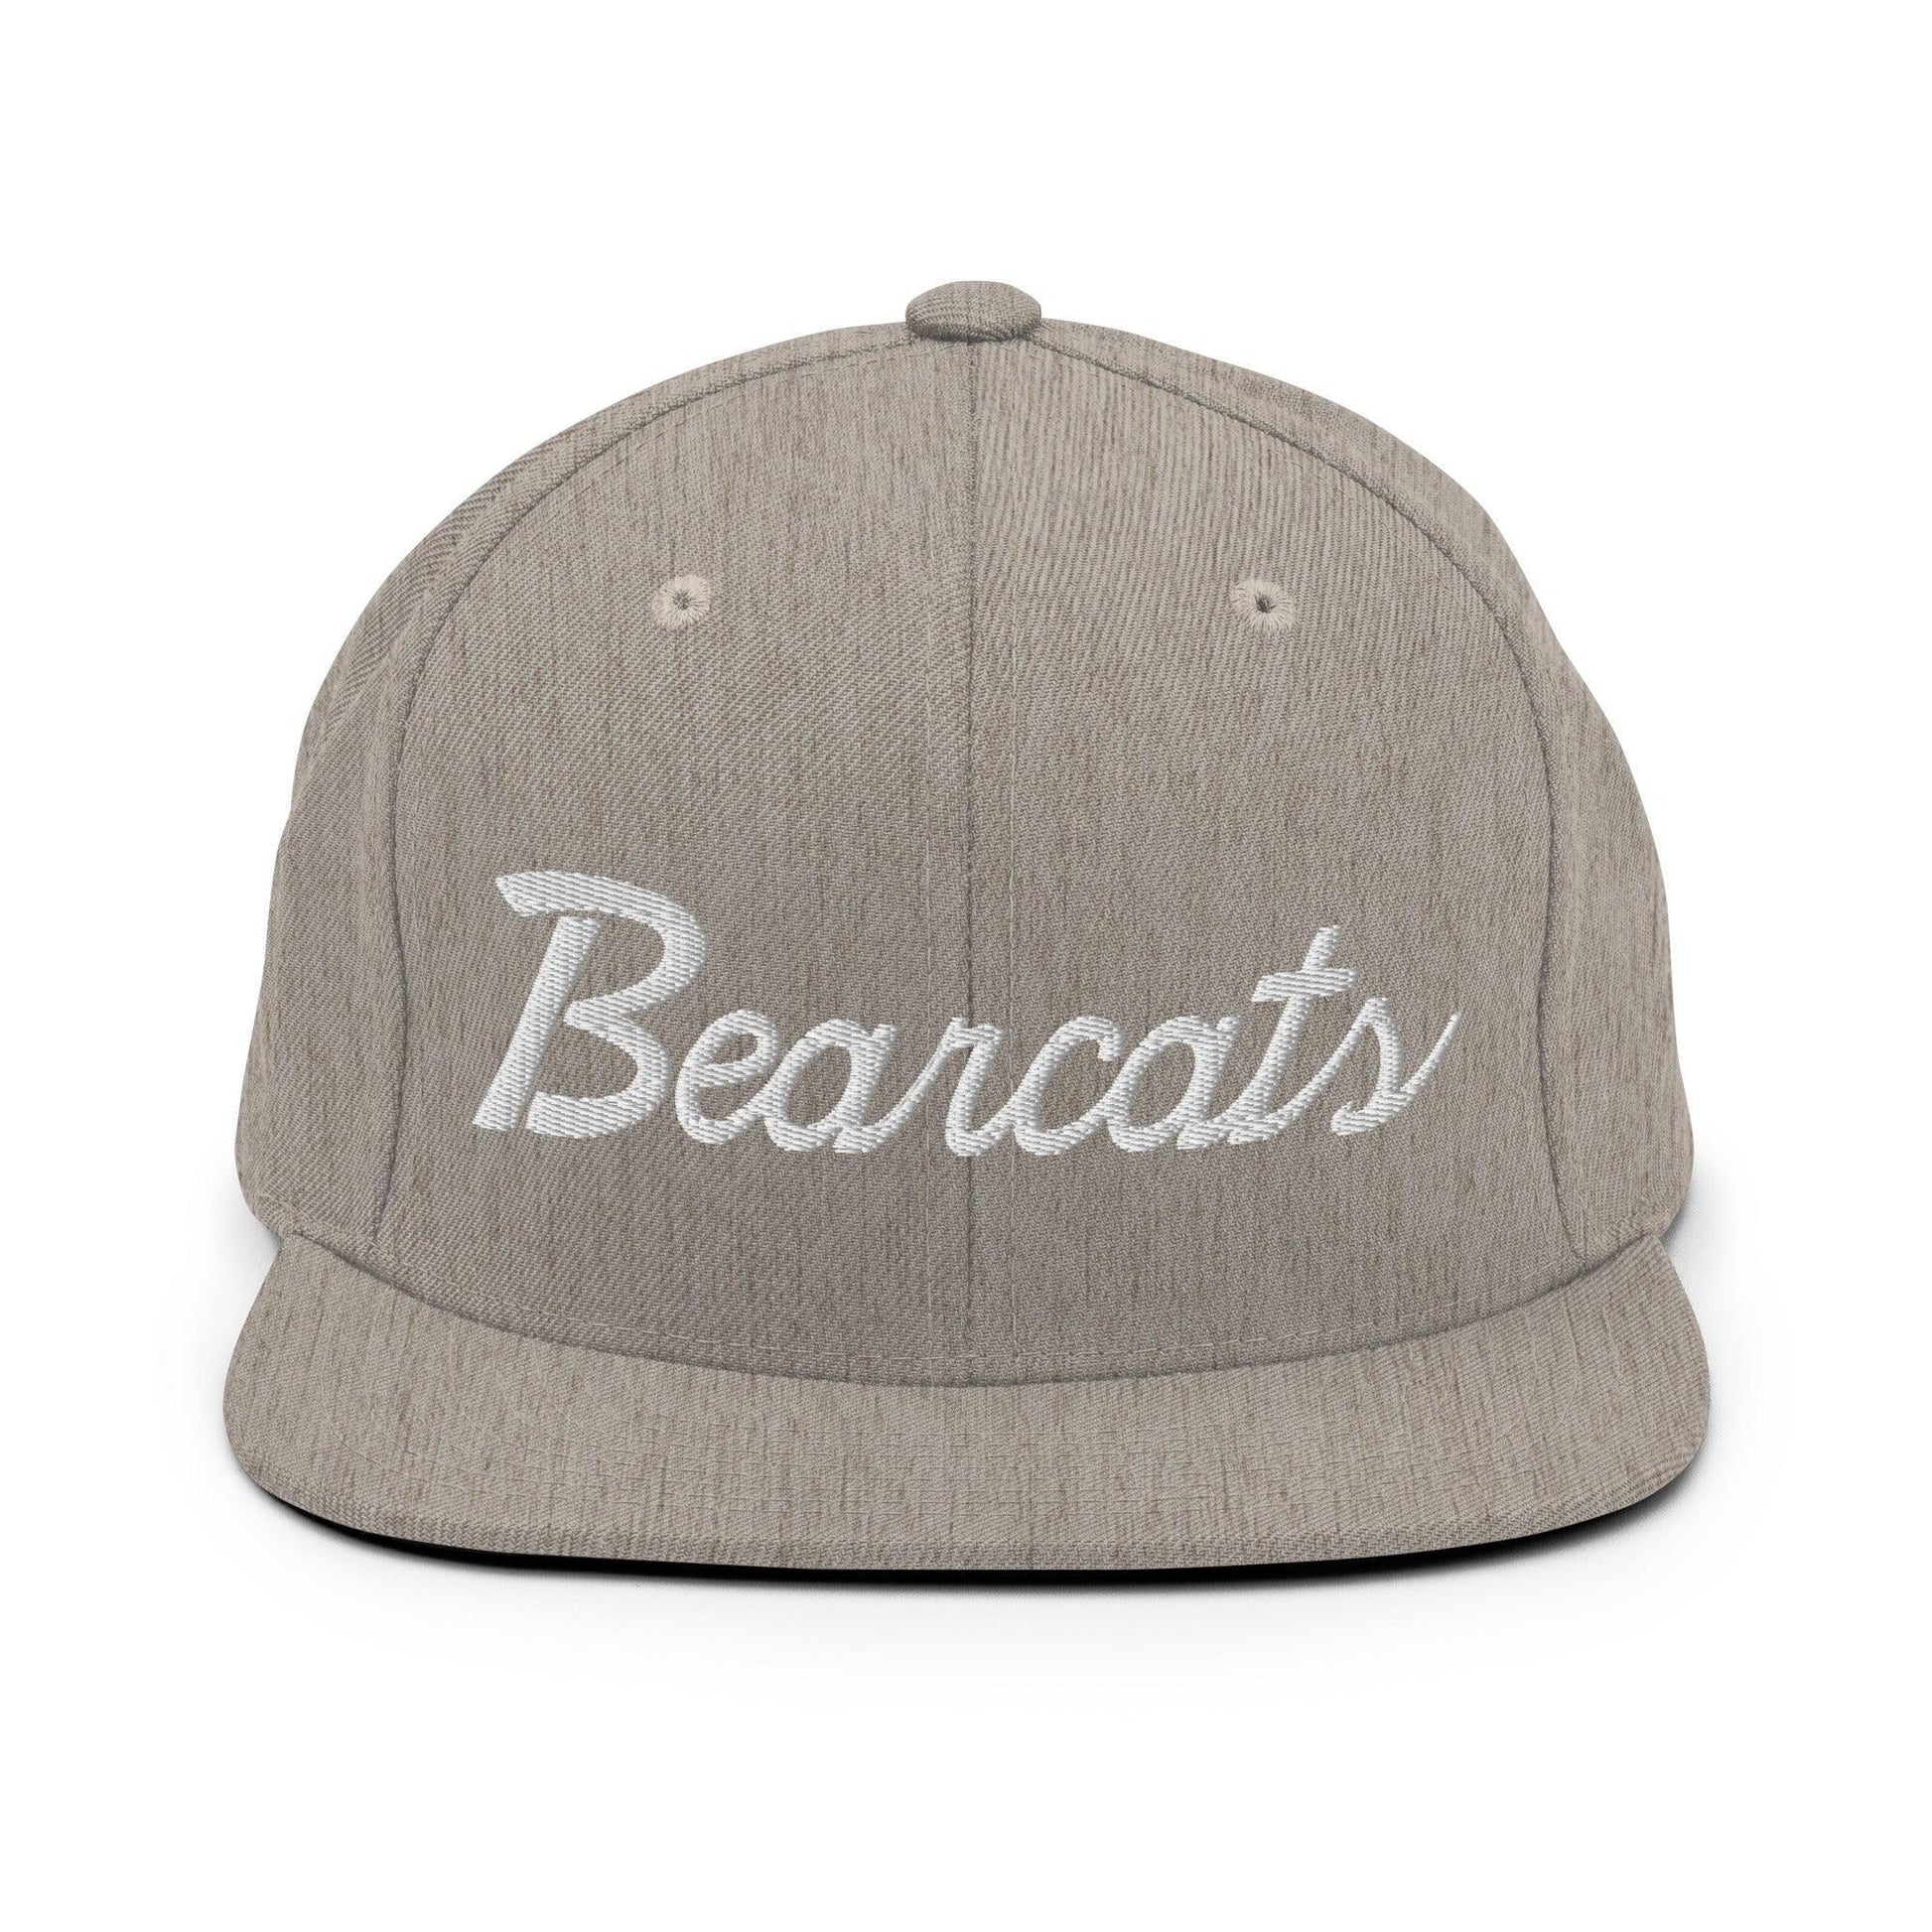 Bearcats School Mascot Script Snapback Hat Heather Grey